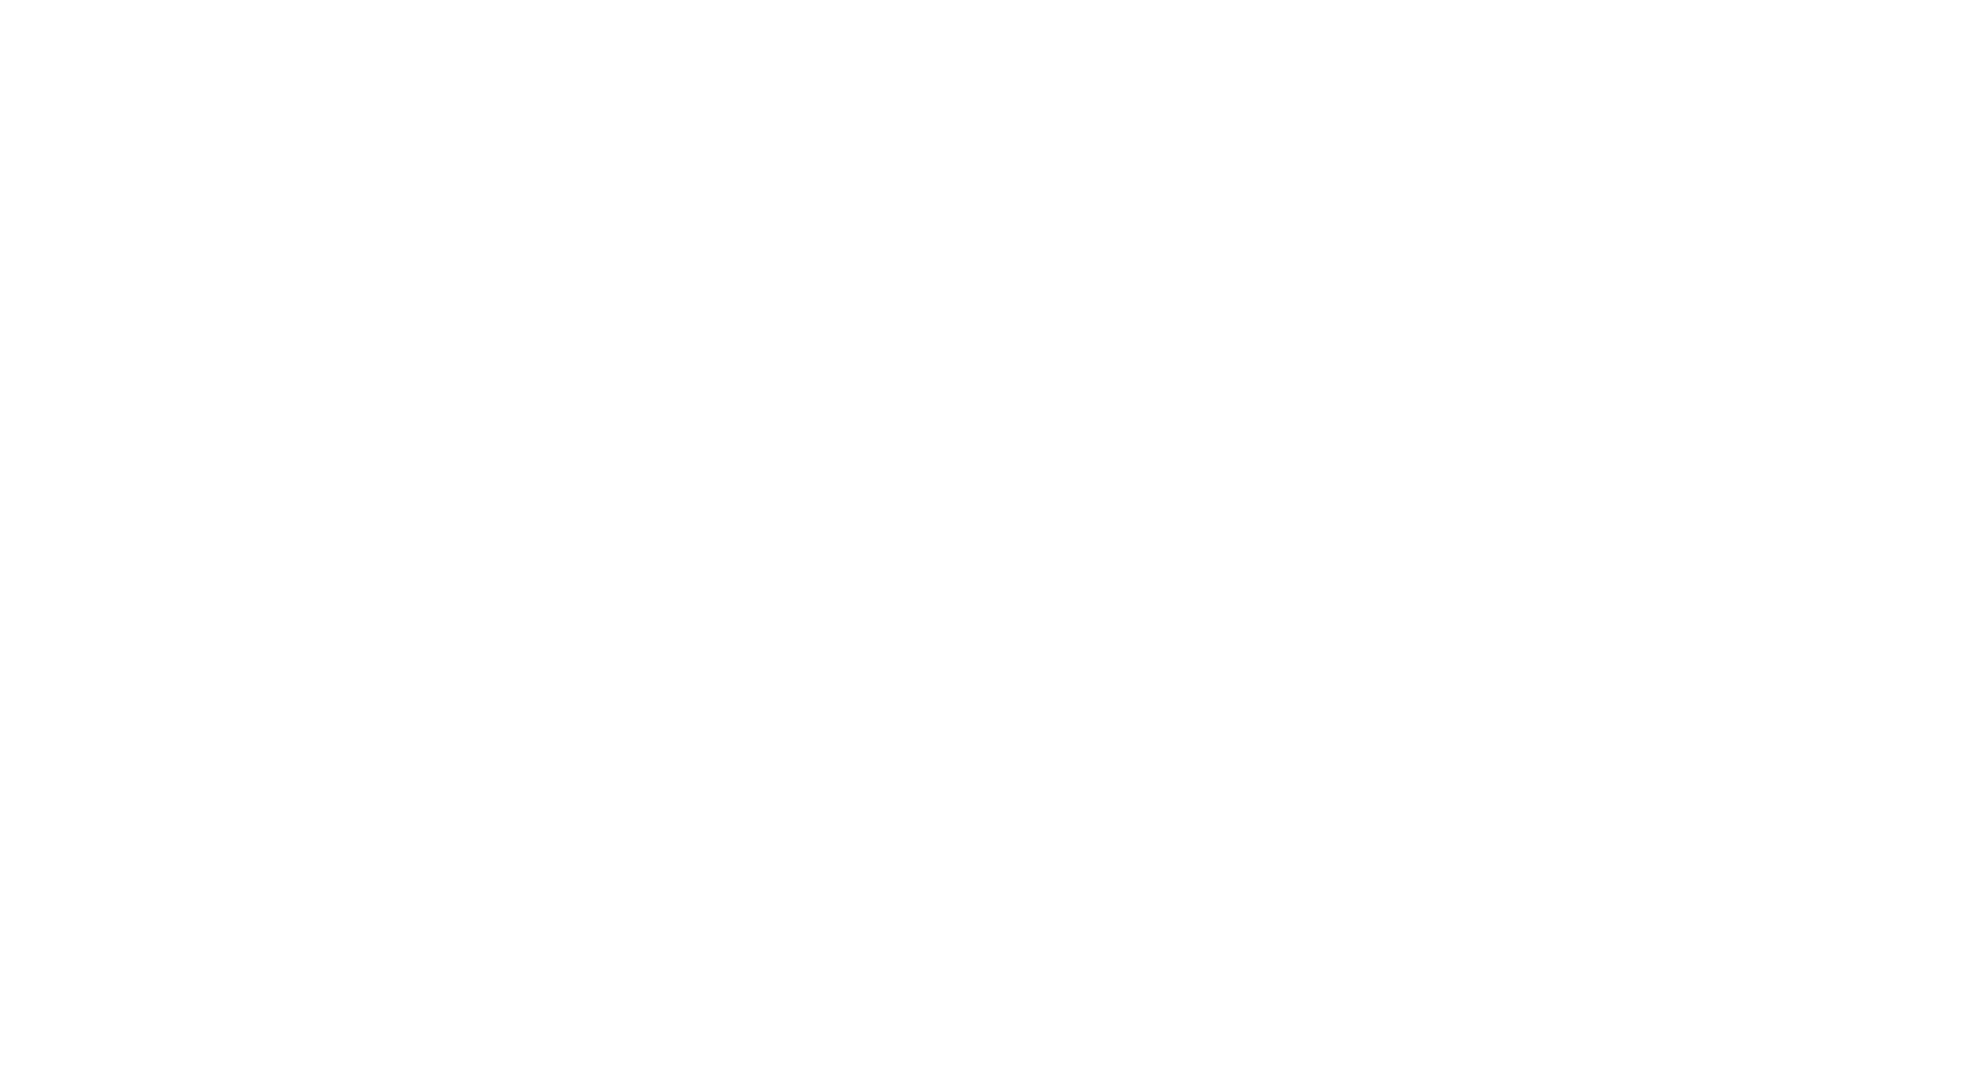 The Hero logo